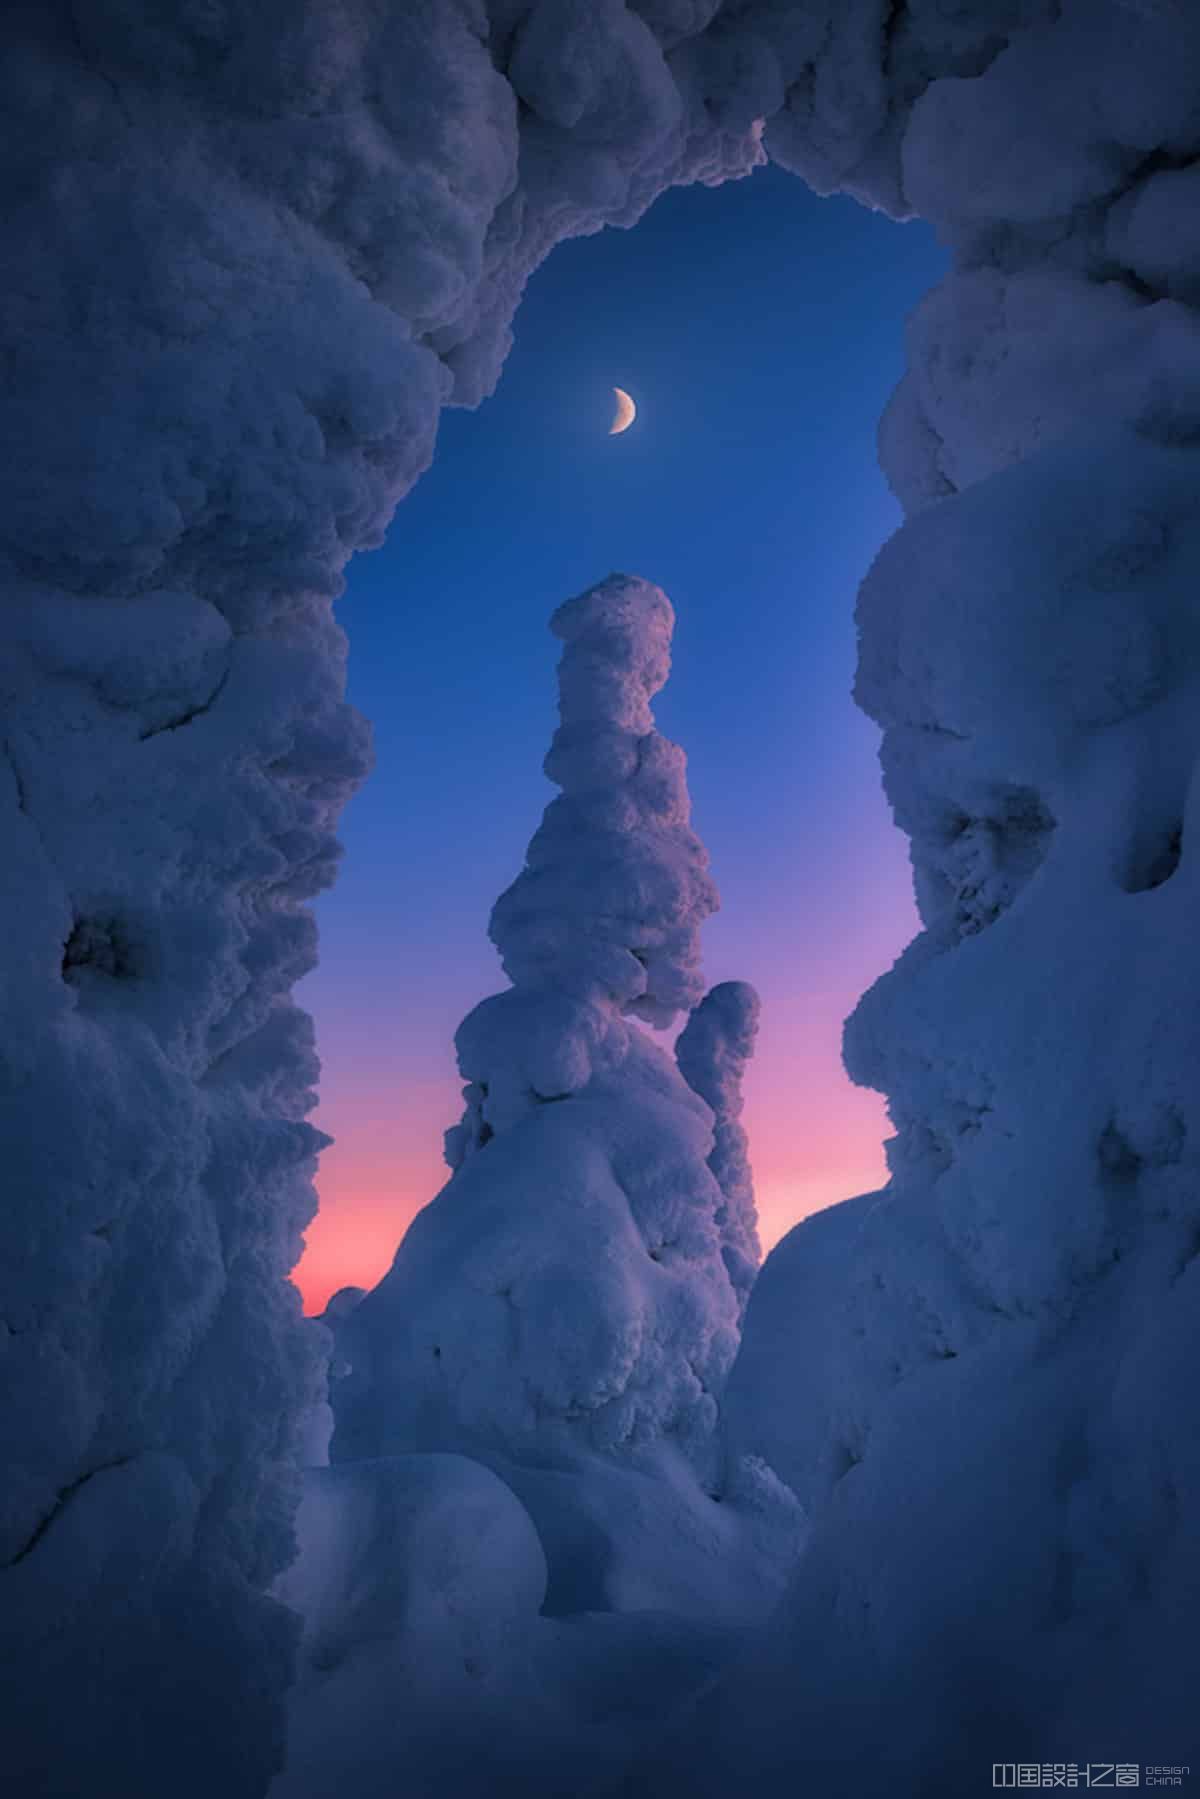 Moo<em></em>nrise in Lapland, Finland.